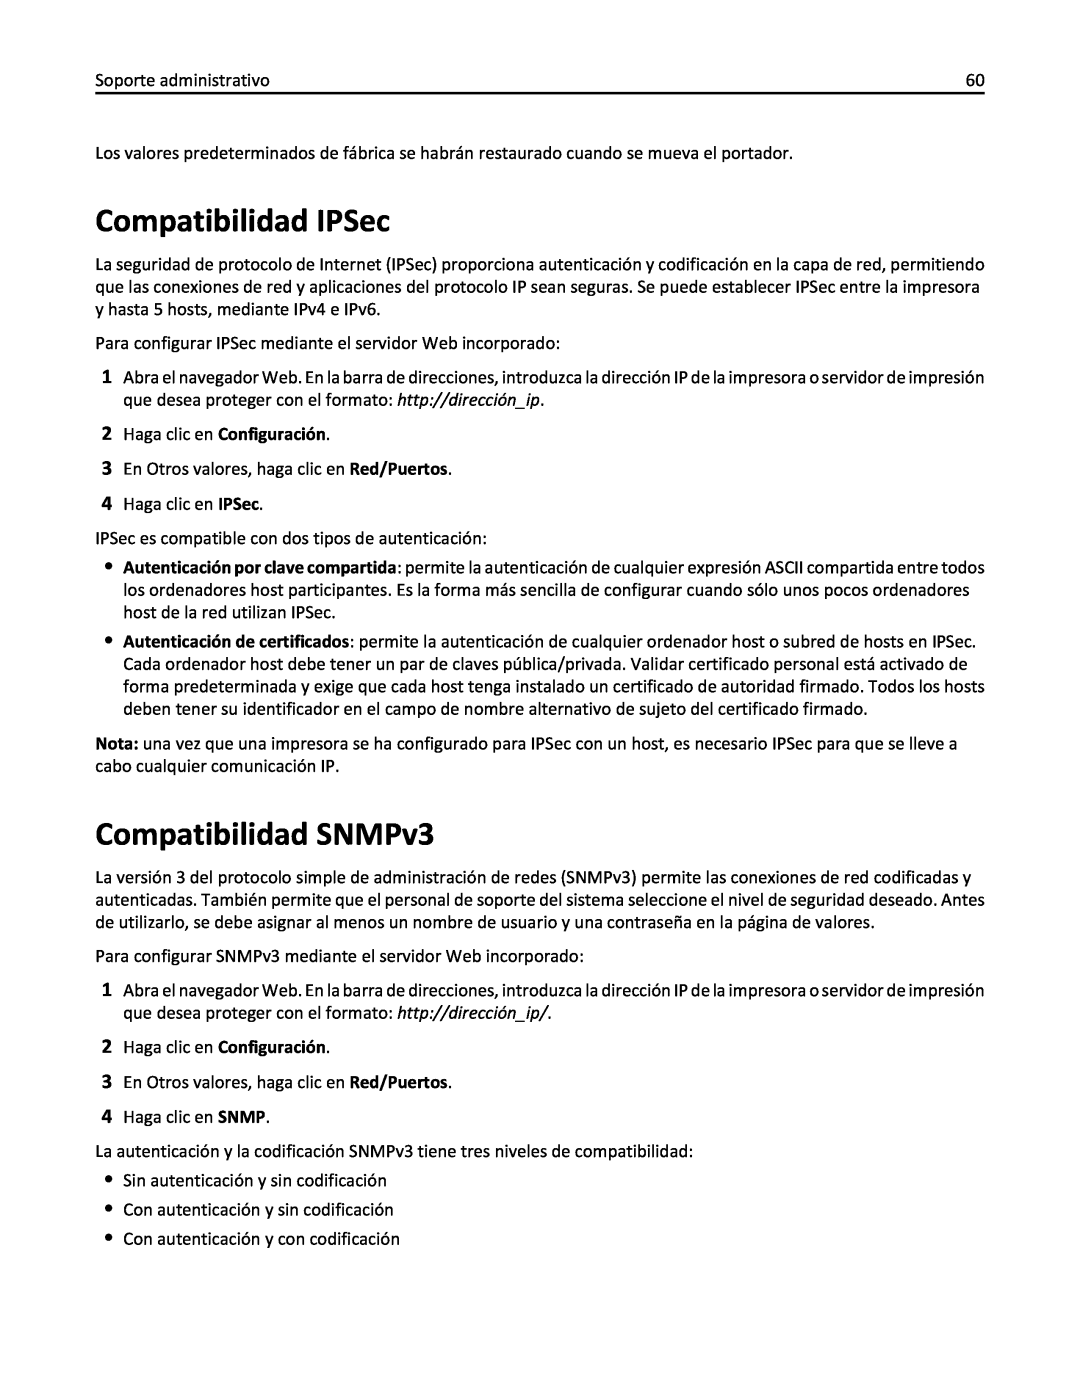 Lexmark 2500 manual Compatibilidad IPSec, Compatibilidad SNMPv3 